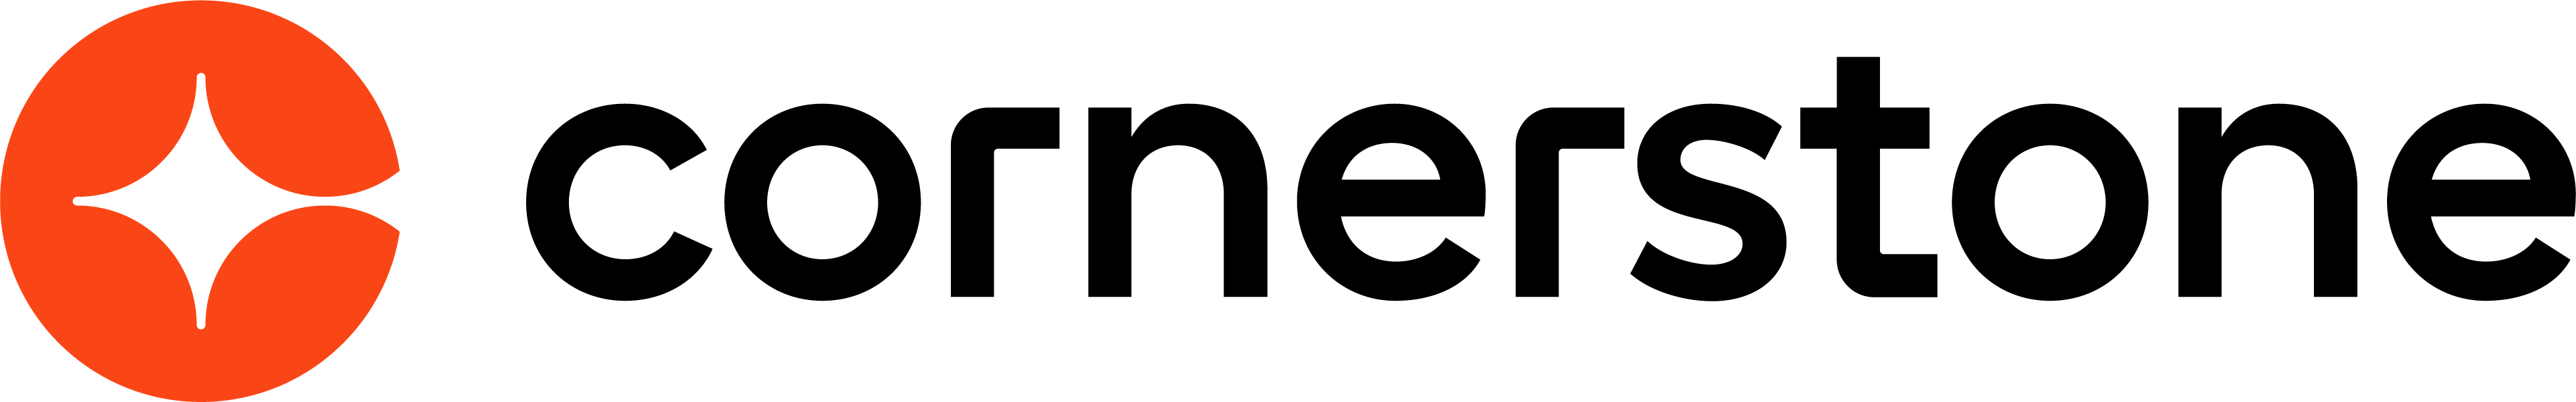 NEW-CSOD-logo-HRZ-RGB_(1).png